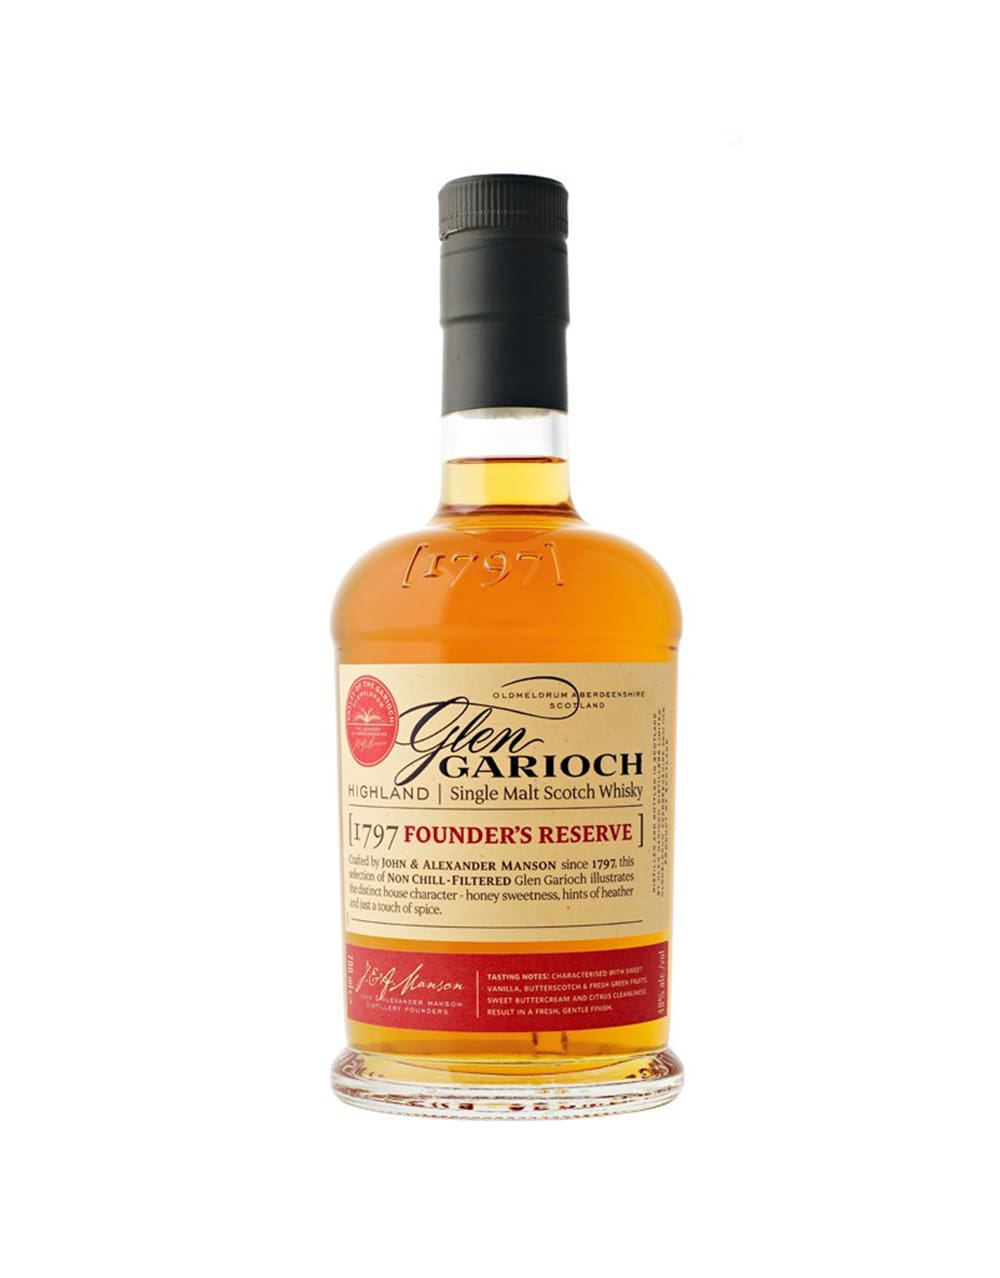 Glen Garioch 1797 Founders Reserve Single Malt Scotch Whisky